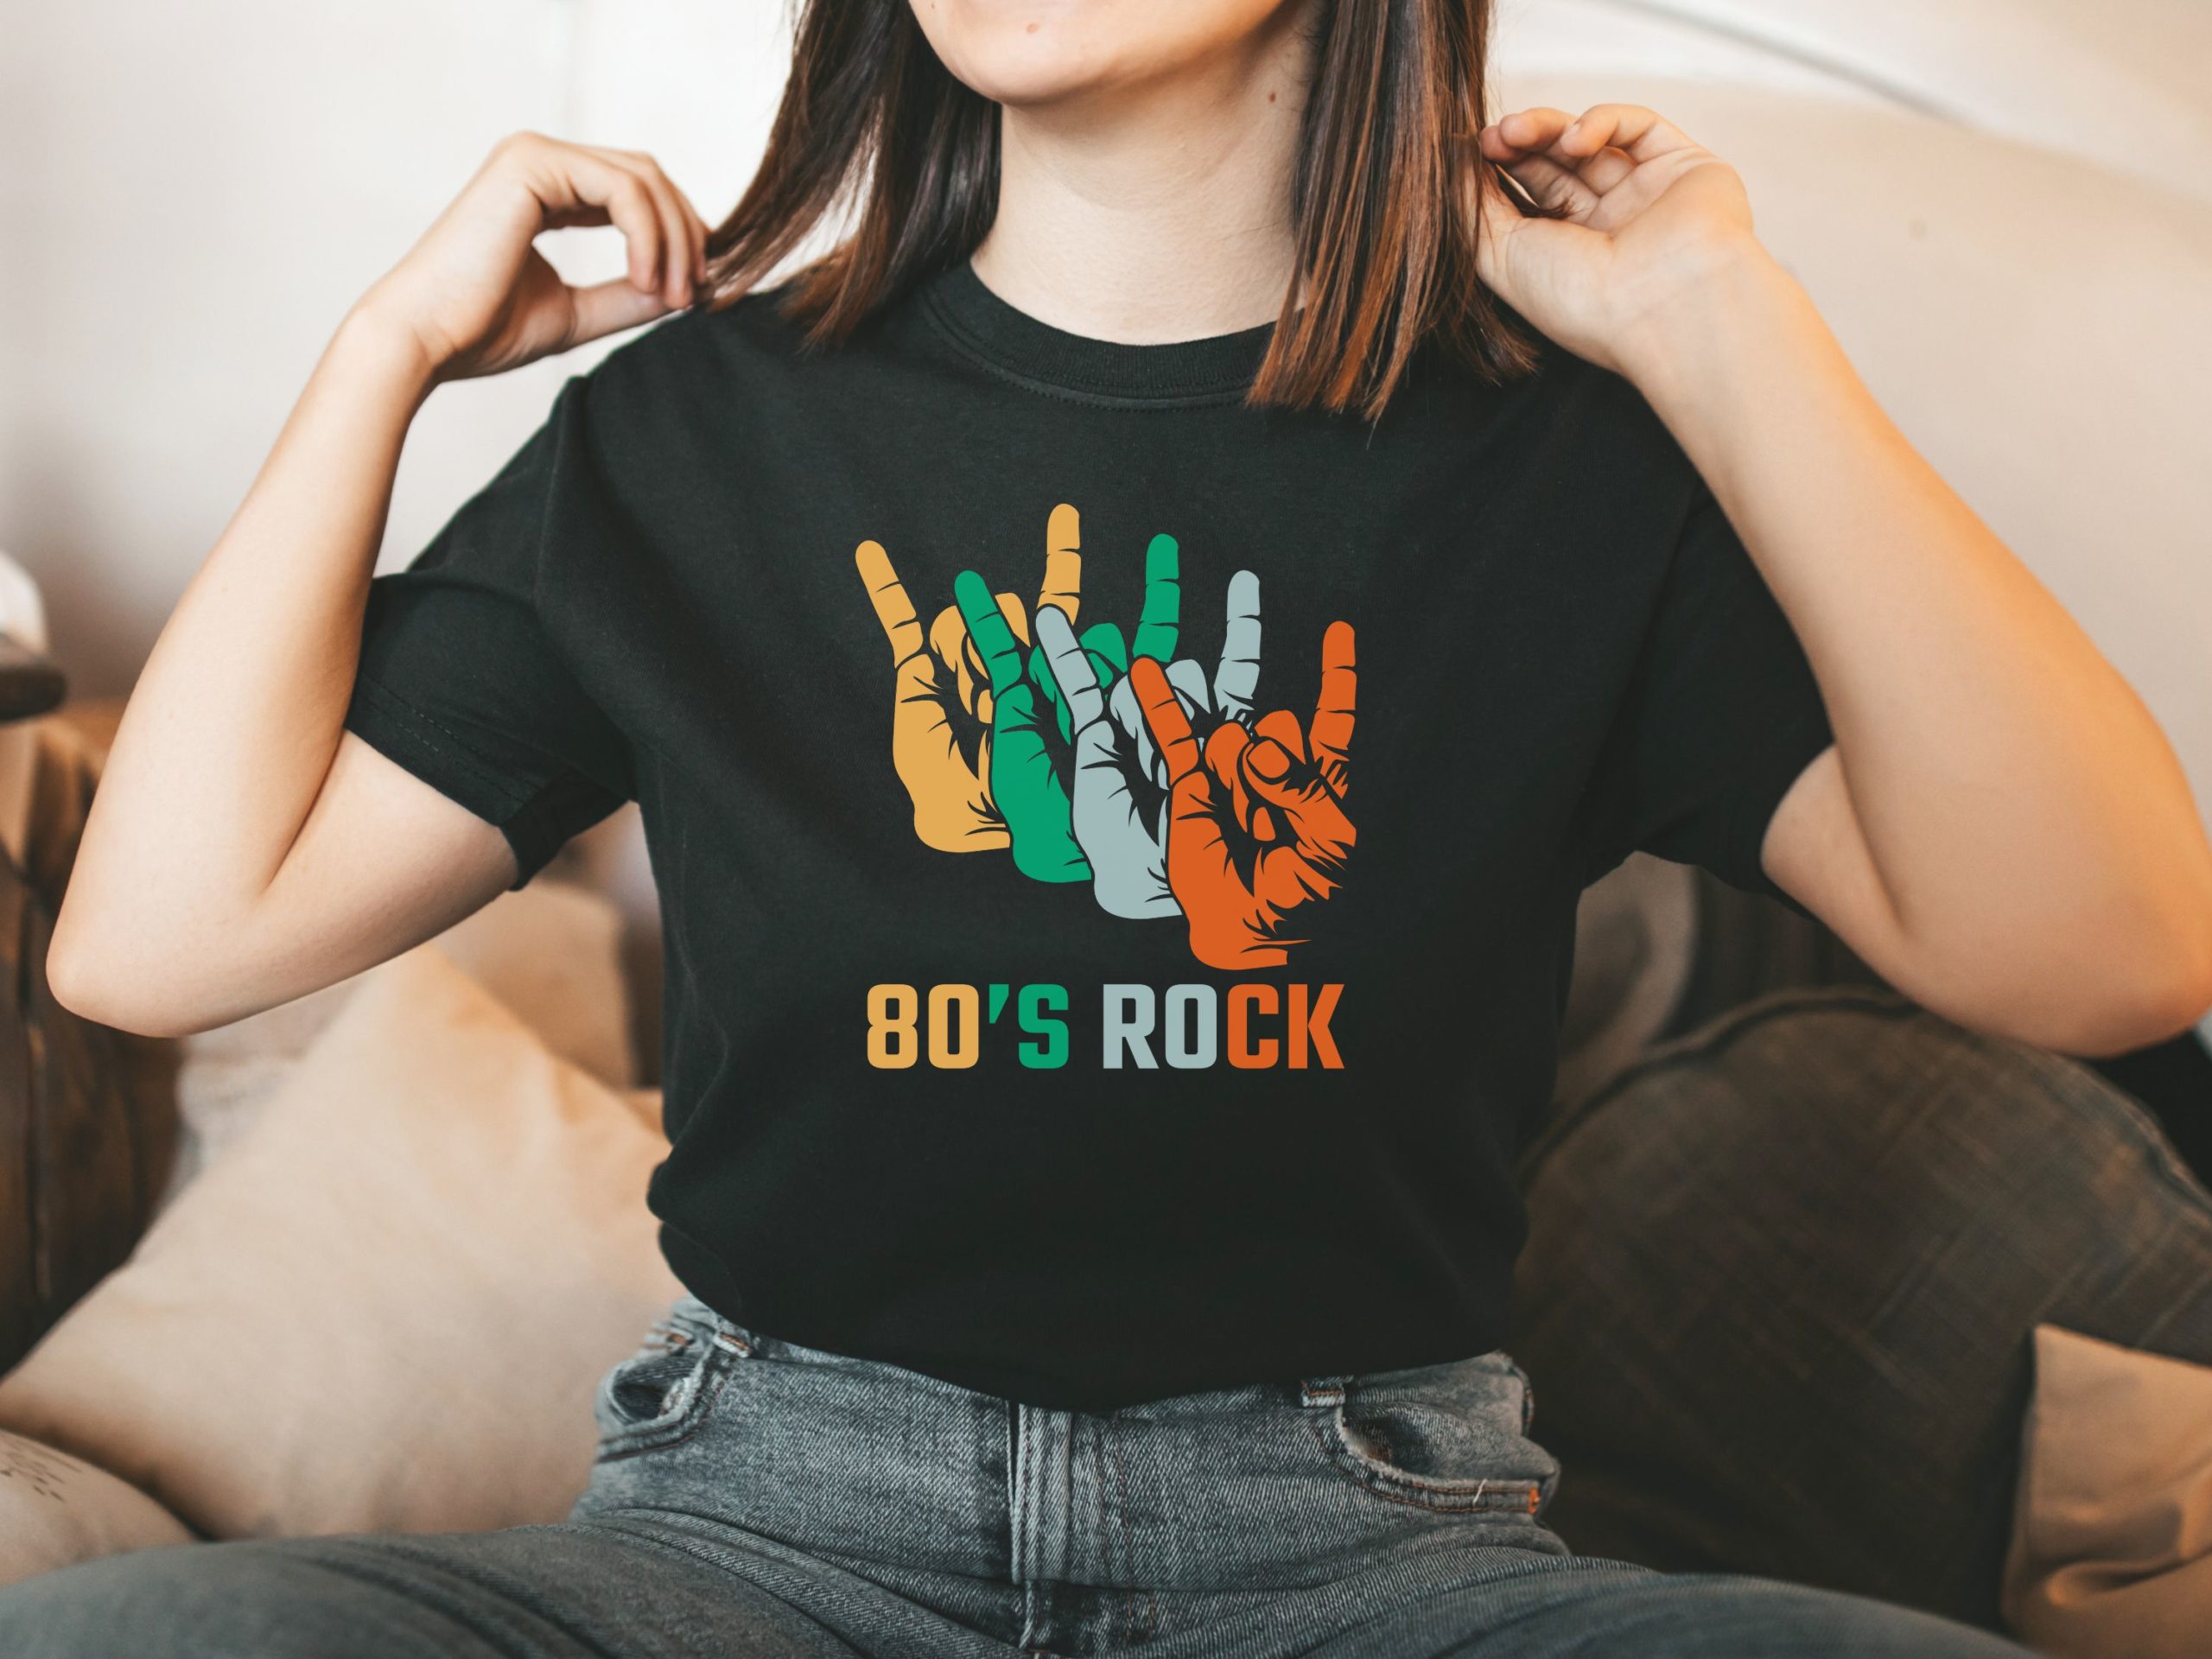 80s rock shirt, Funny retro shirt, Parents Christmas gift